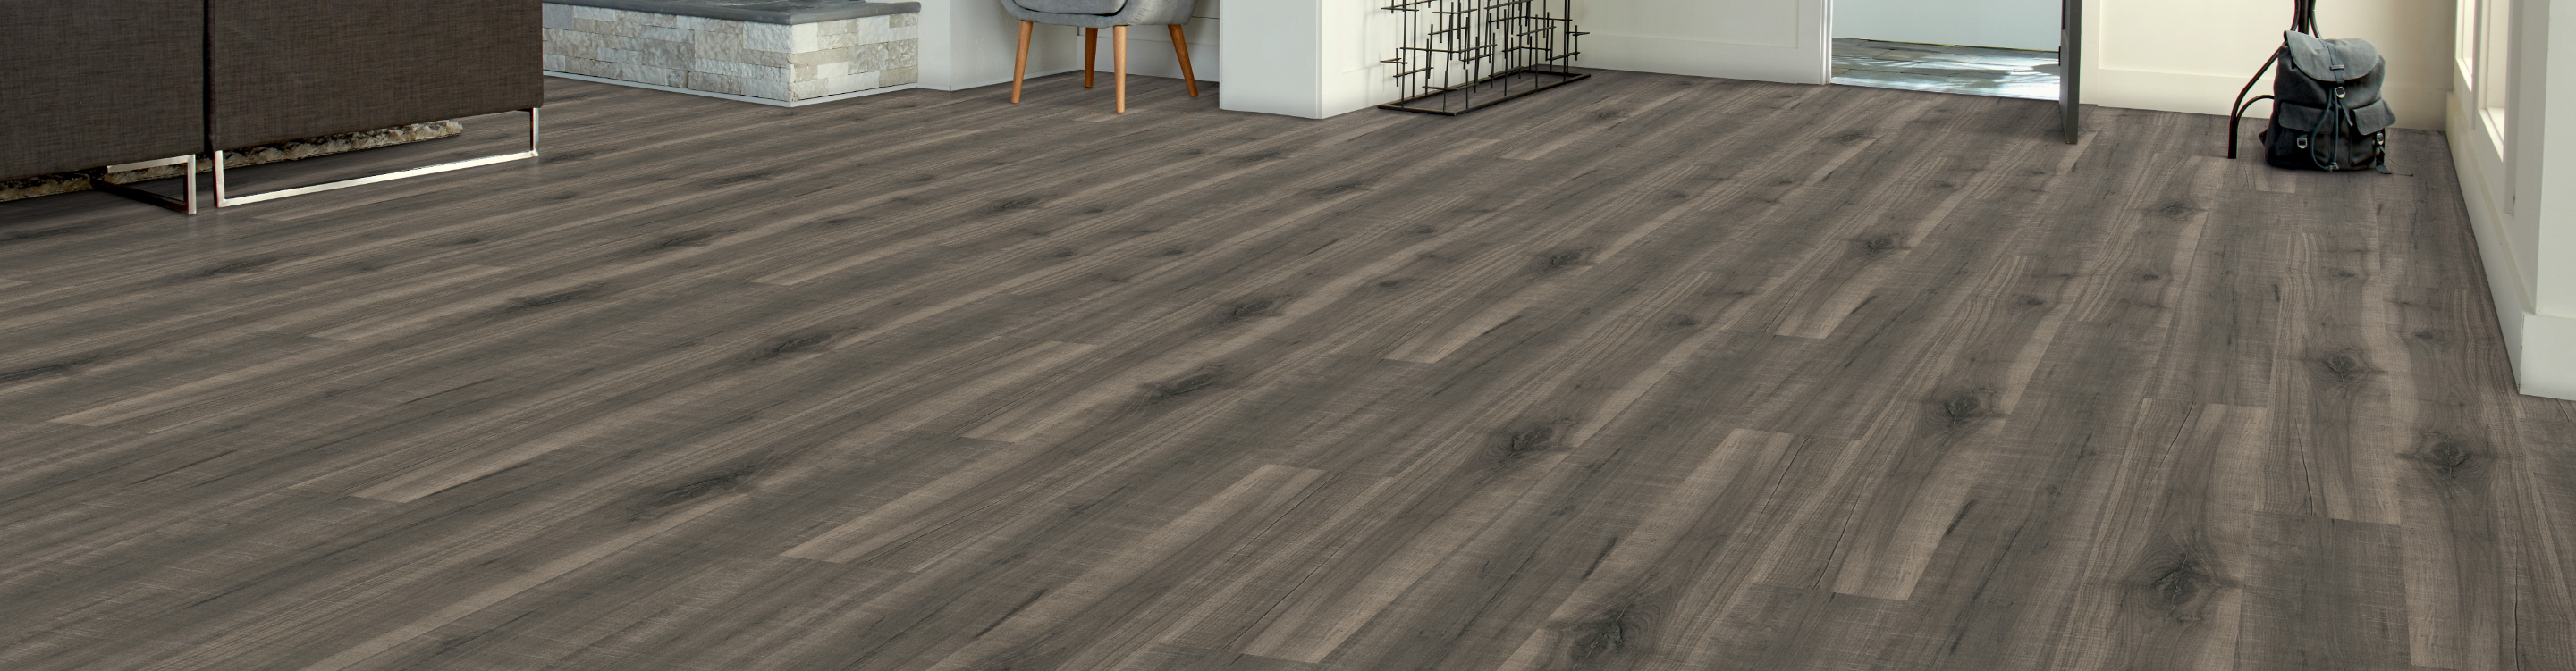 Gray Hardwood Flooring in Living Room